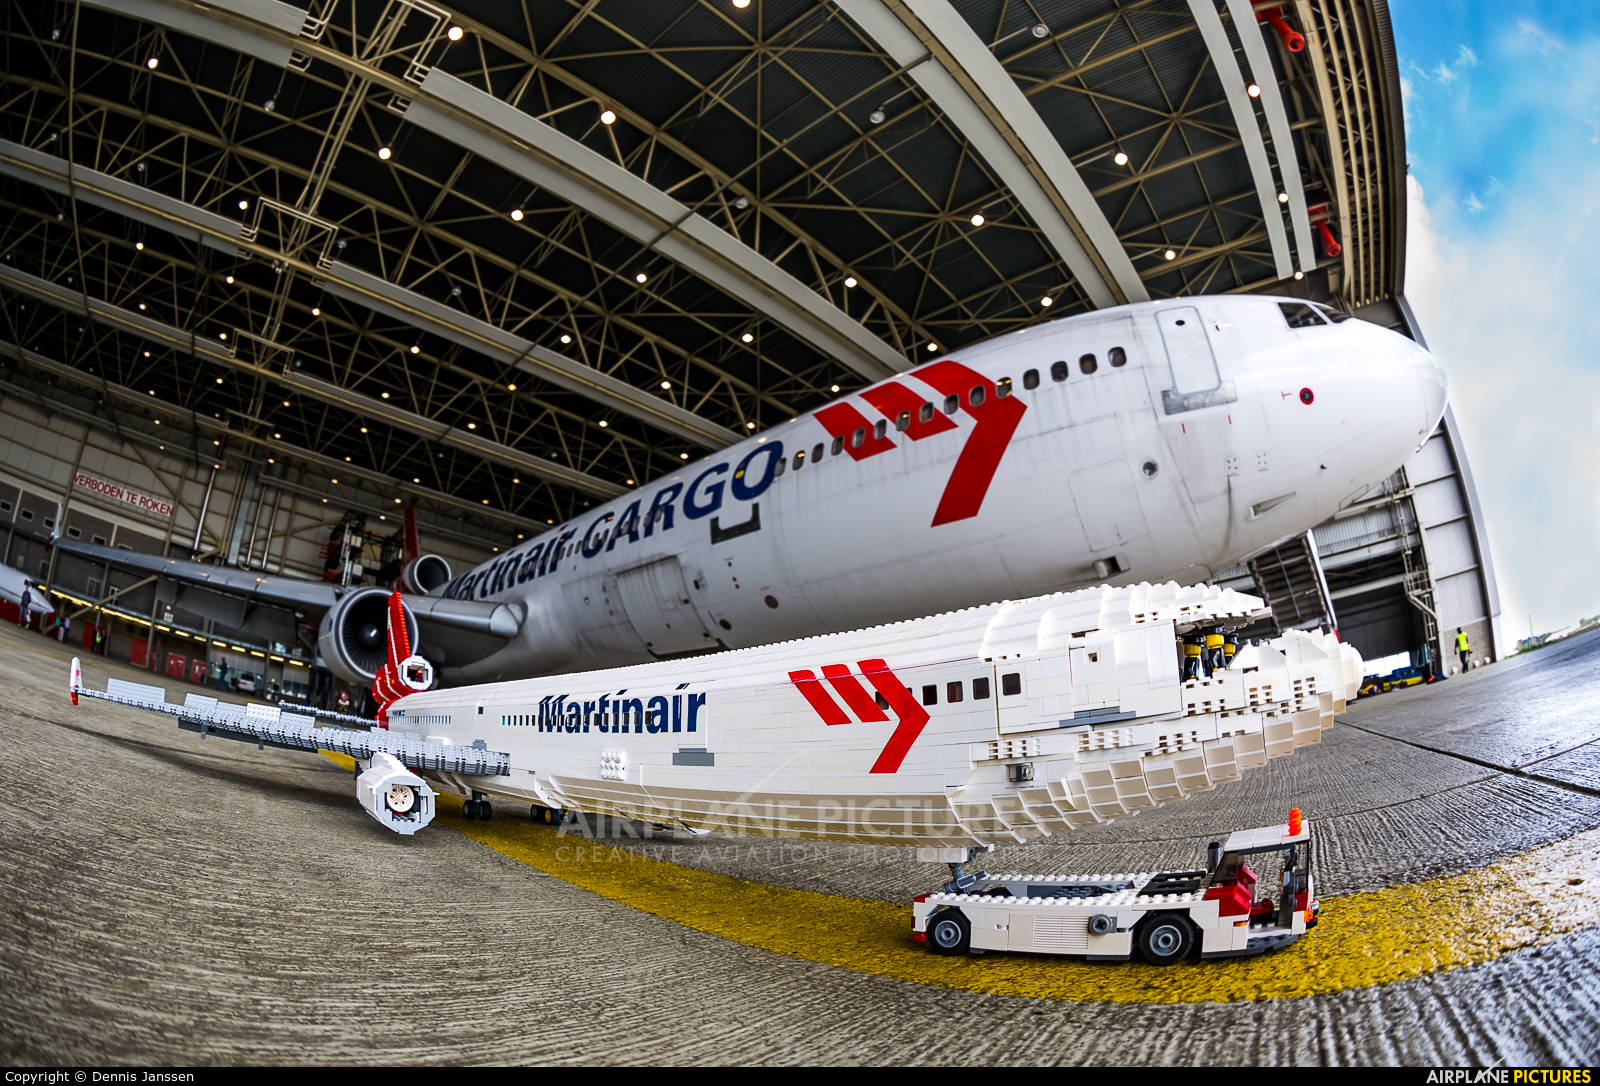 Martinair Cargo PH-MCP aircraft at Amsterdam - Schiphol